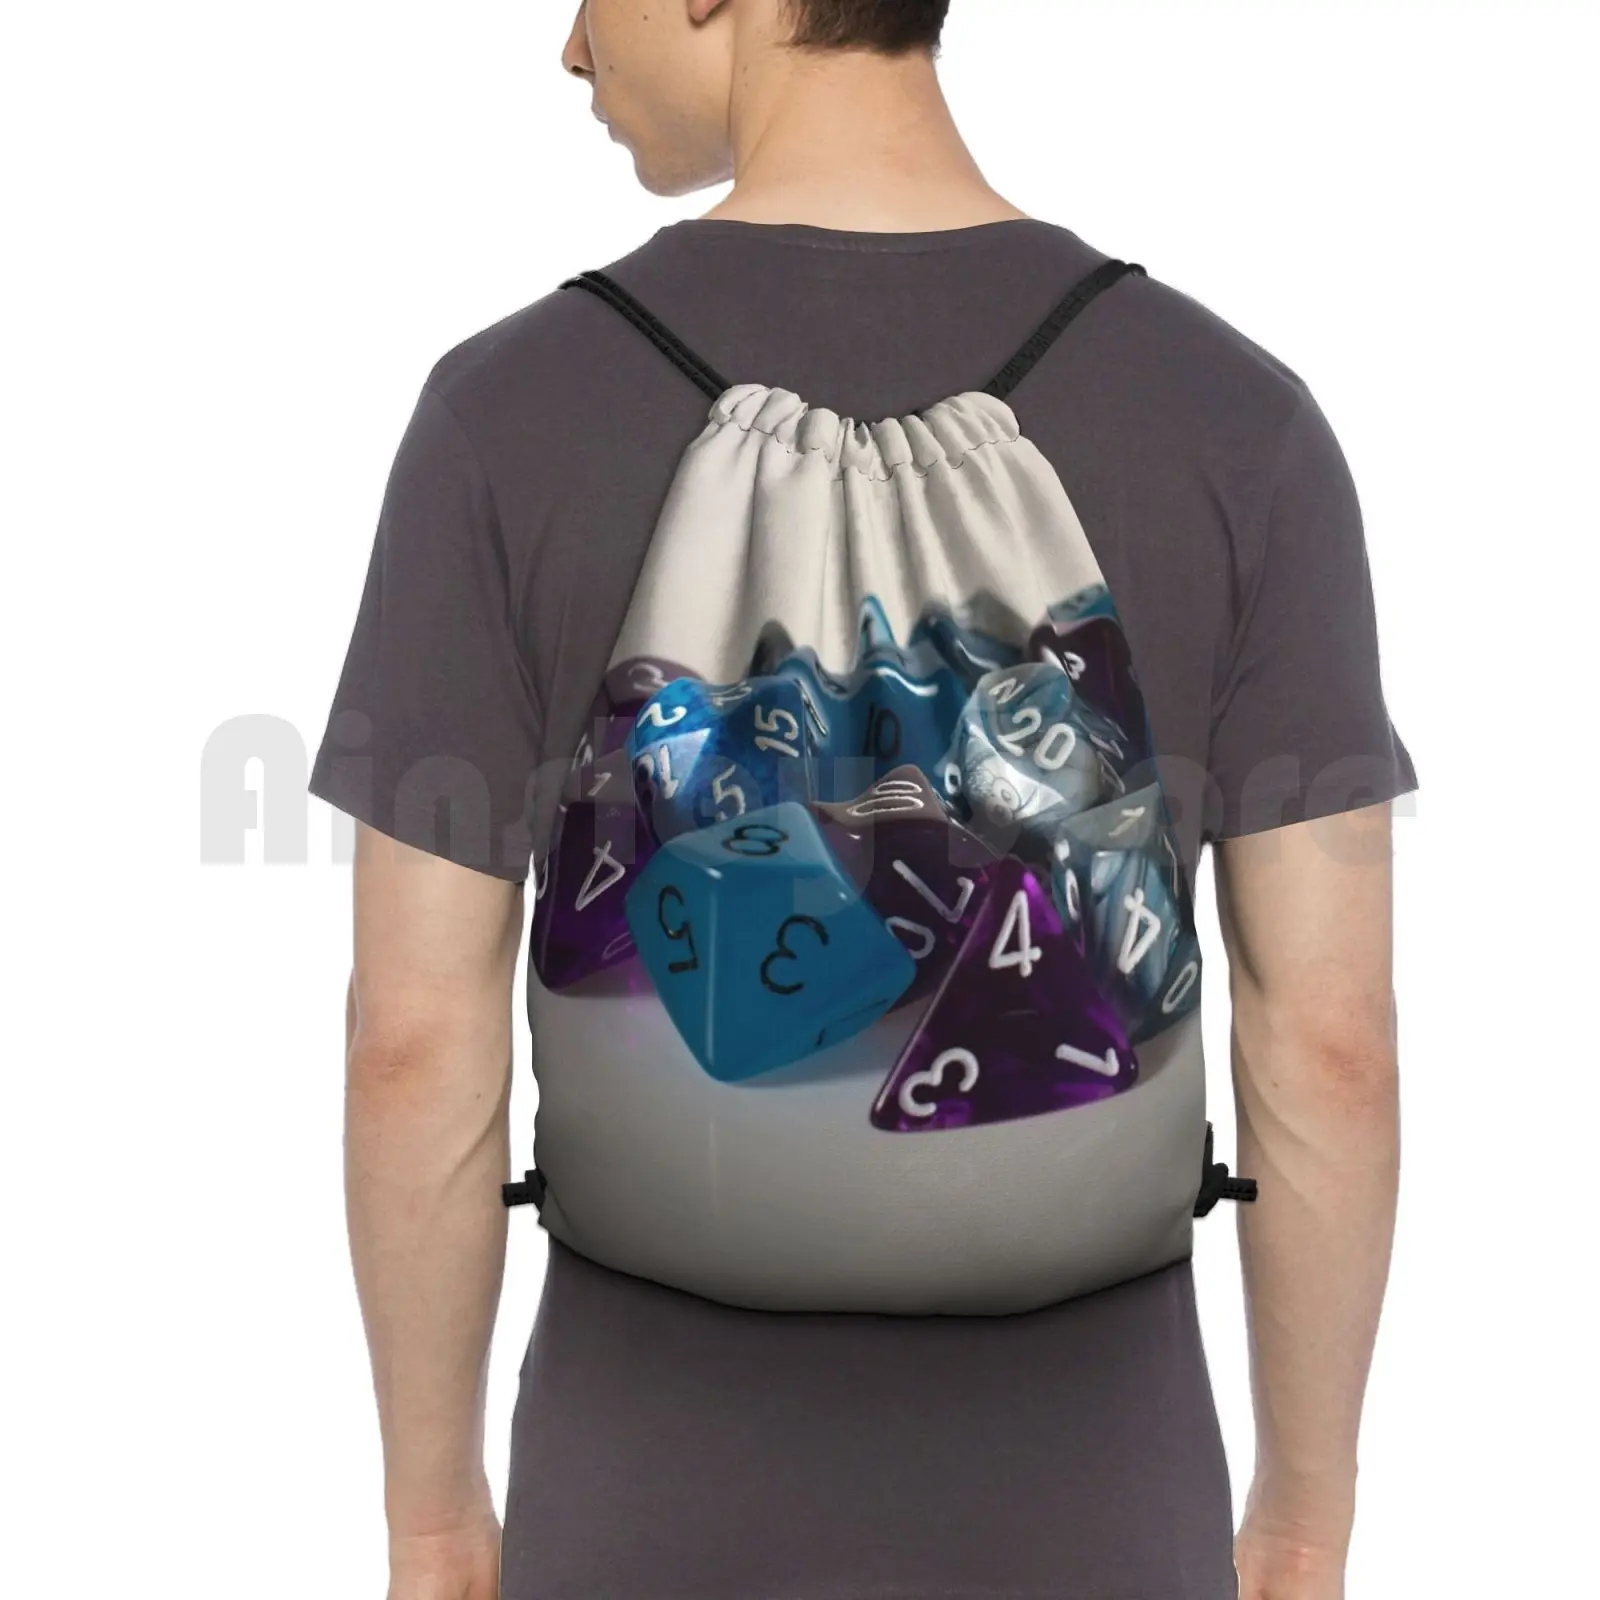 

Silver Blue Purple Dice Backpack Drawstring Bag Riding Climbing Gym Bag And Dice Games Rpg D20 Pathfinder Geek Gamer Nerd